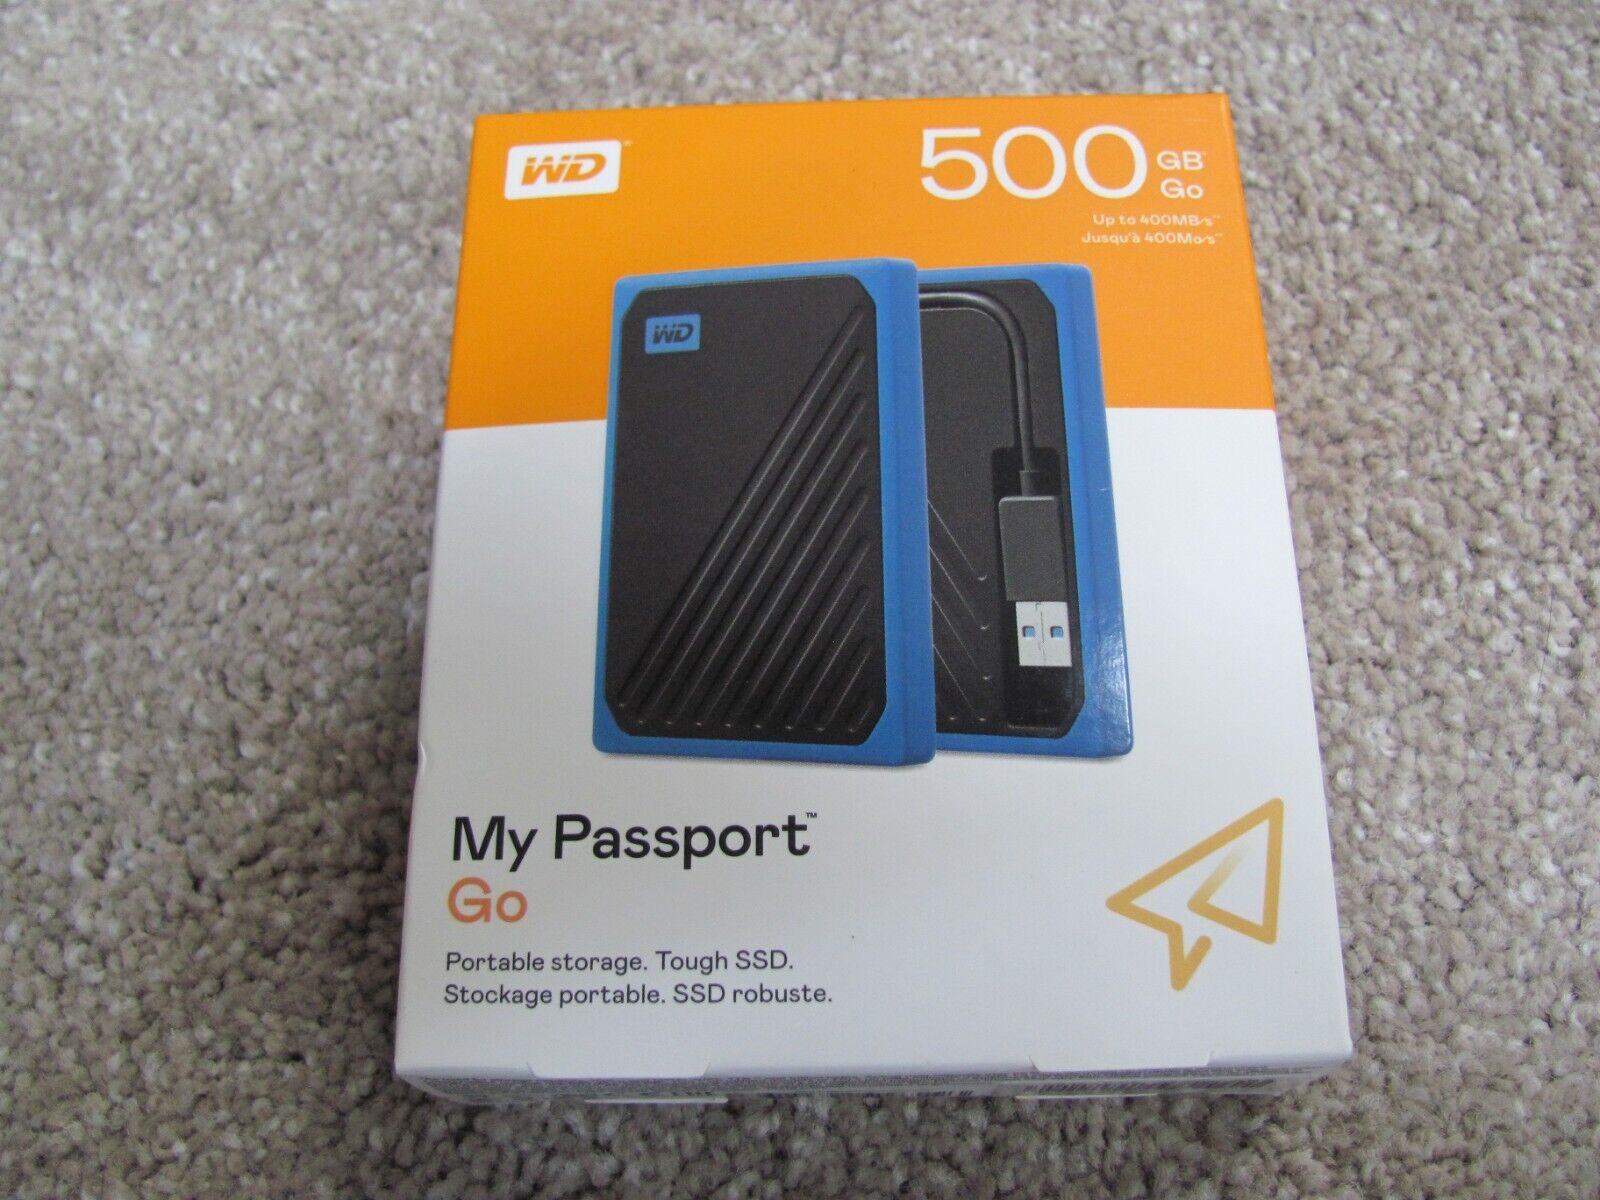 WD My Passport Go 500GB External USB 3.0 SSD Portable External Drive - Black/Cob